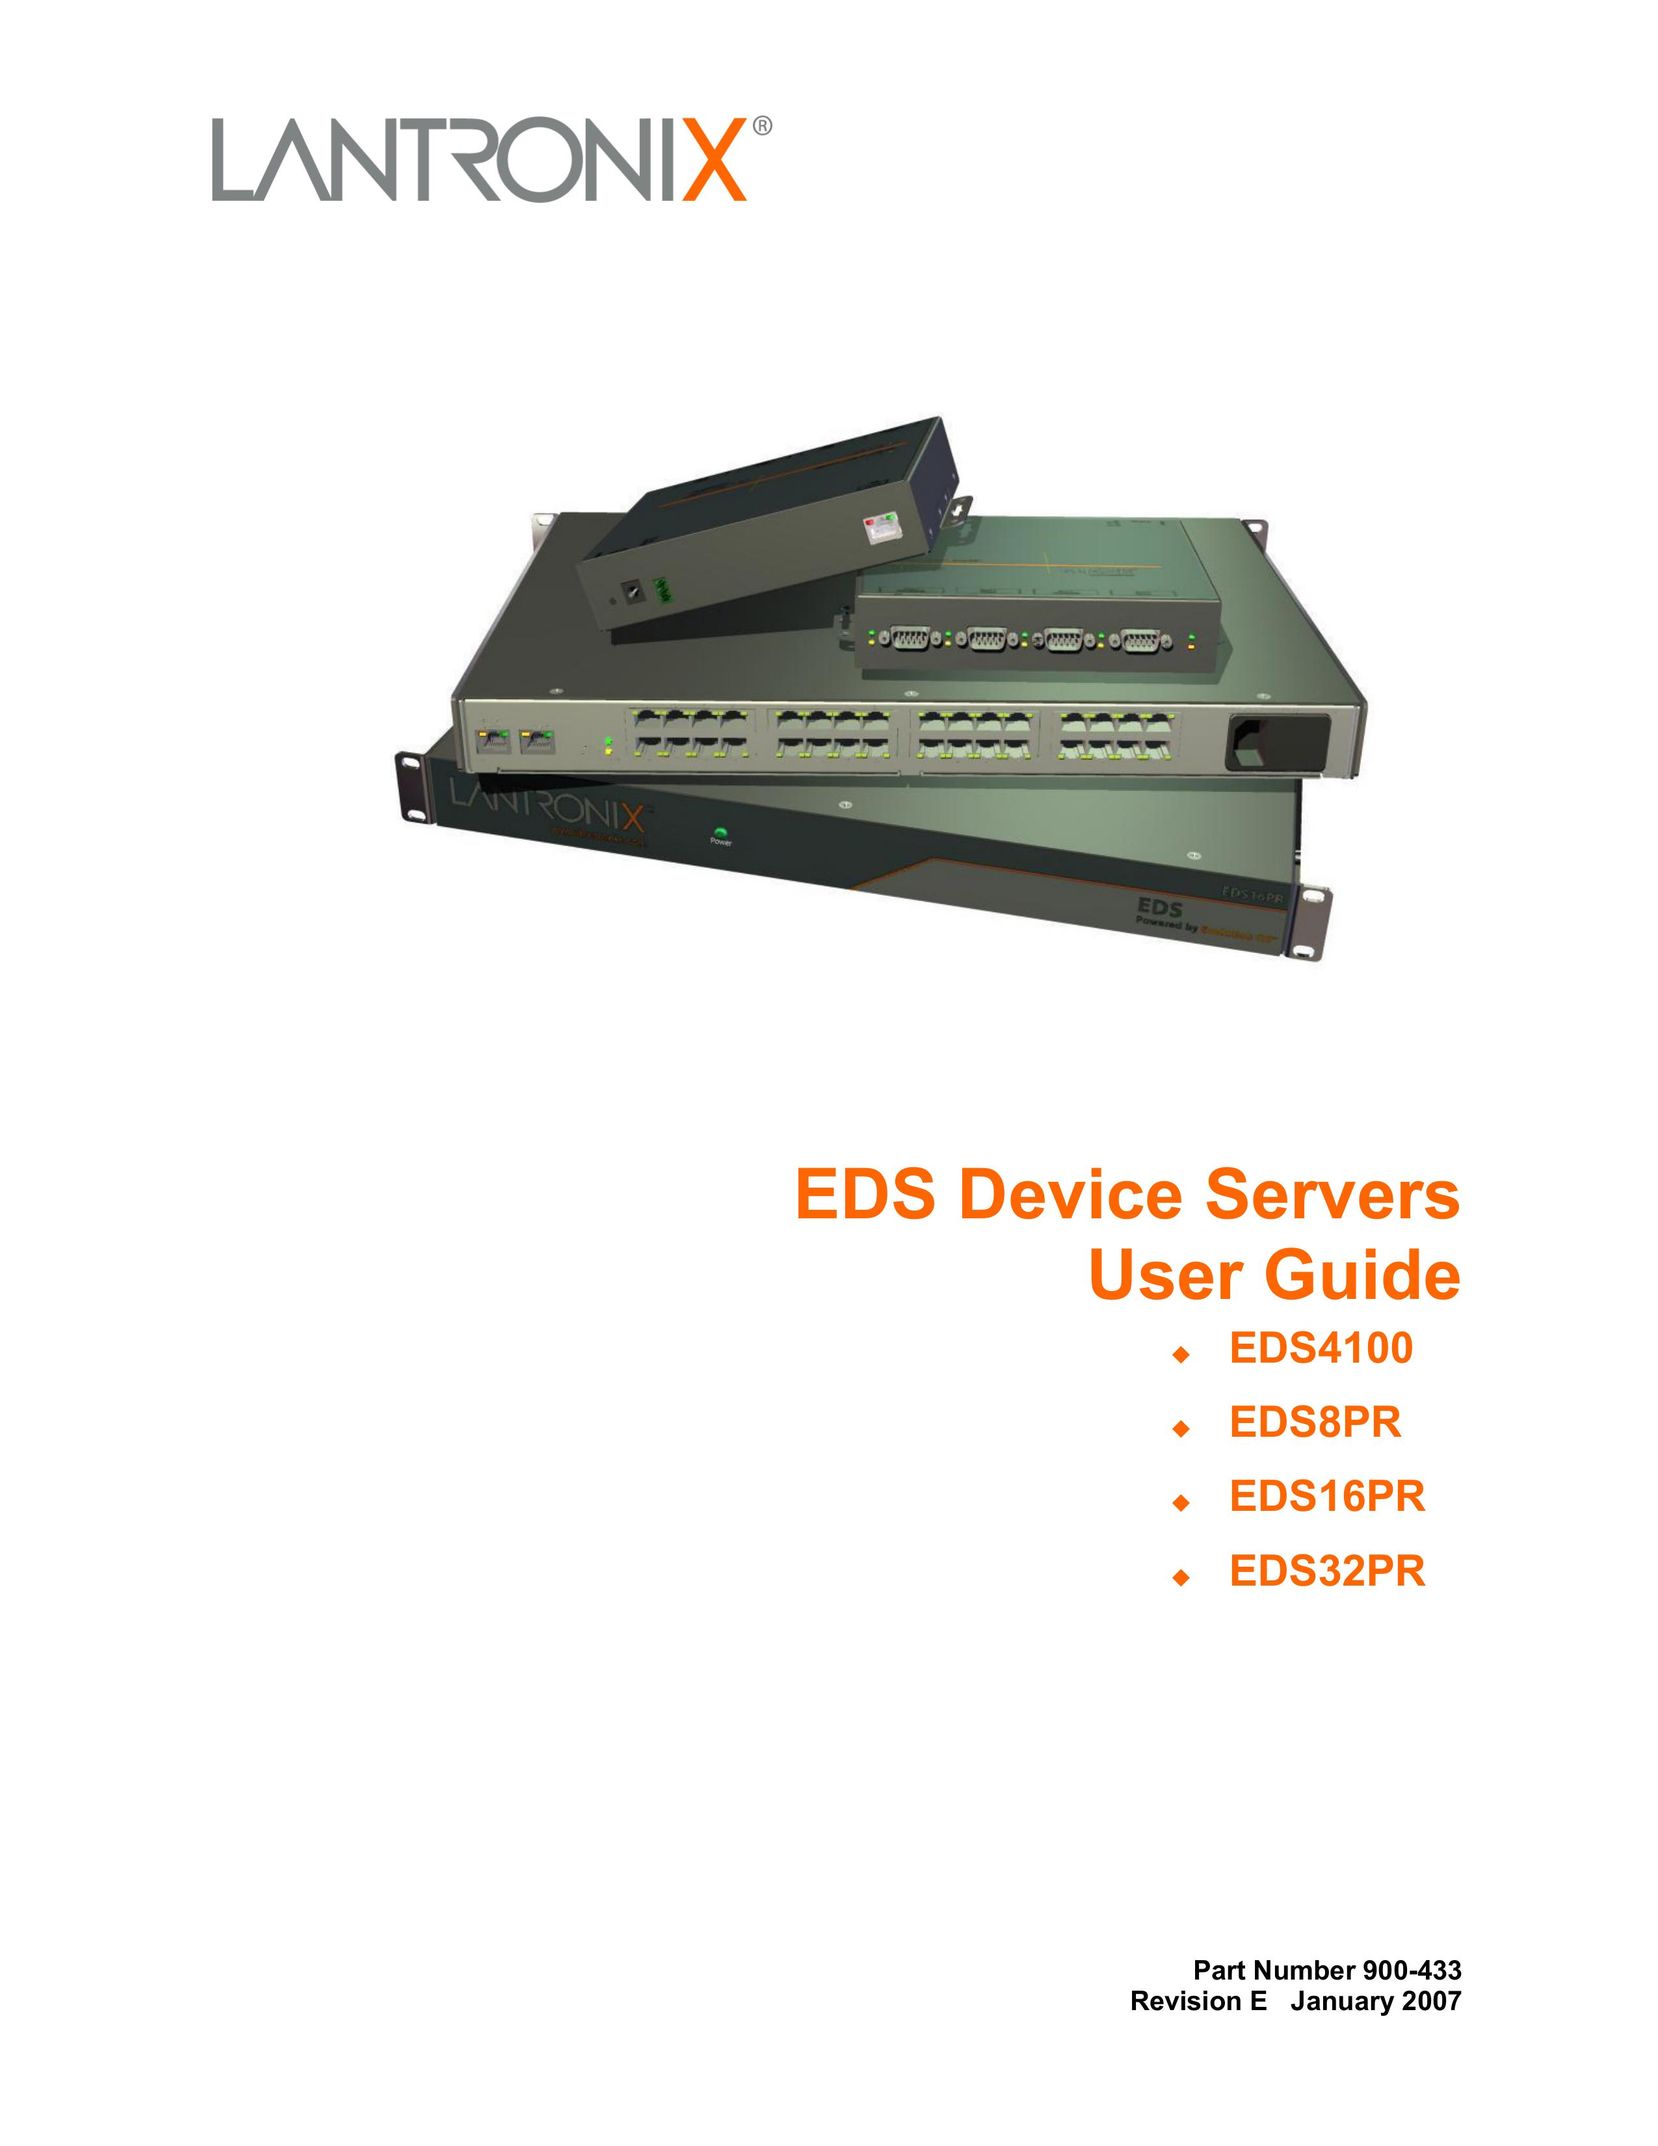 Lantronix EDS16PR Network Card User Manual